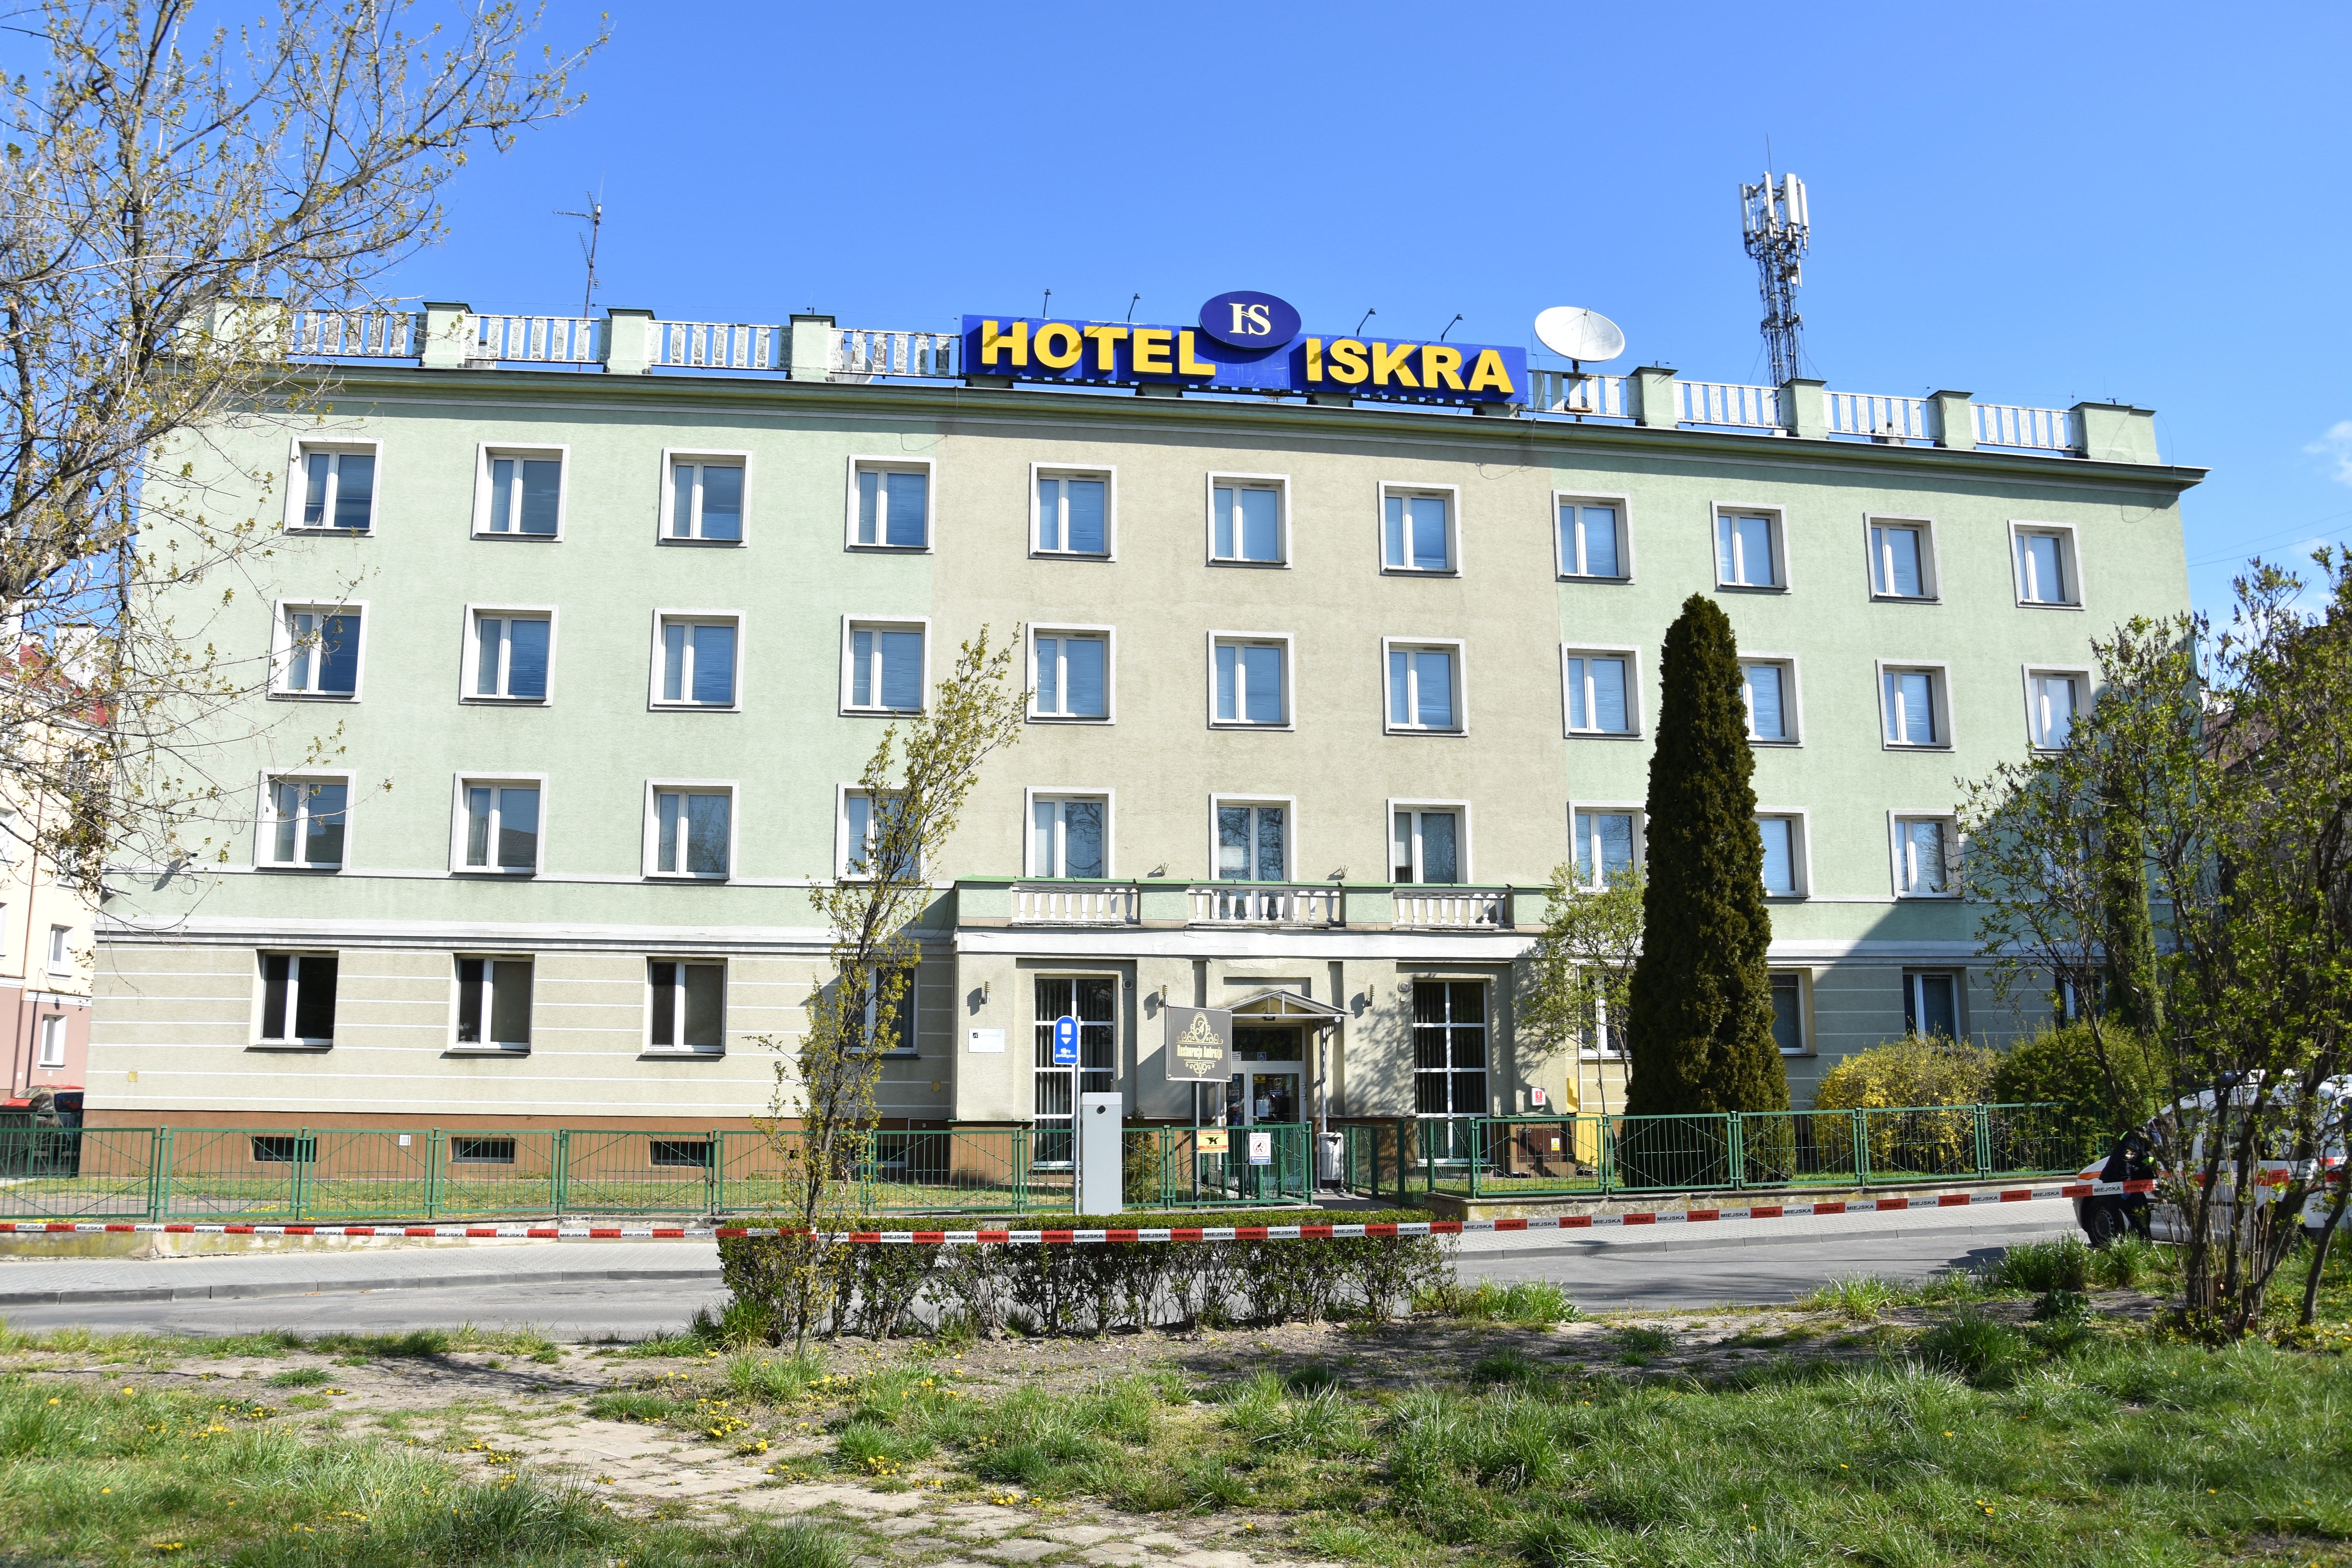 Hotel Iskra - Radom. 